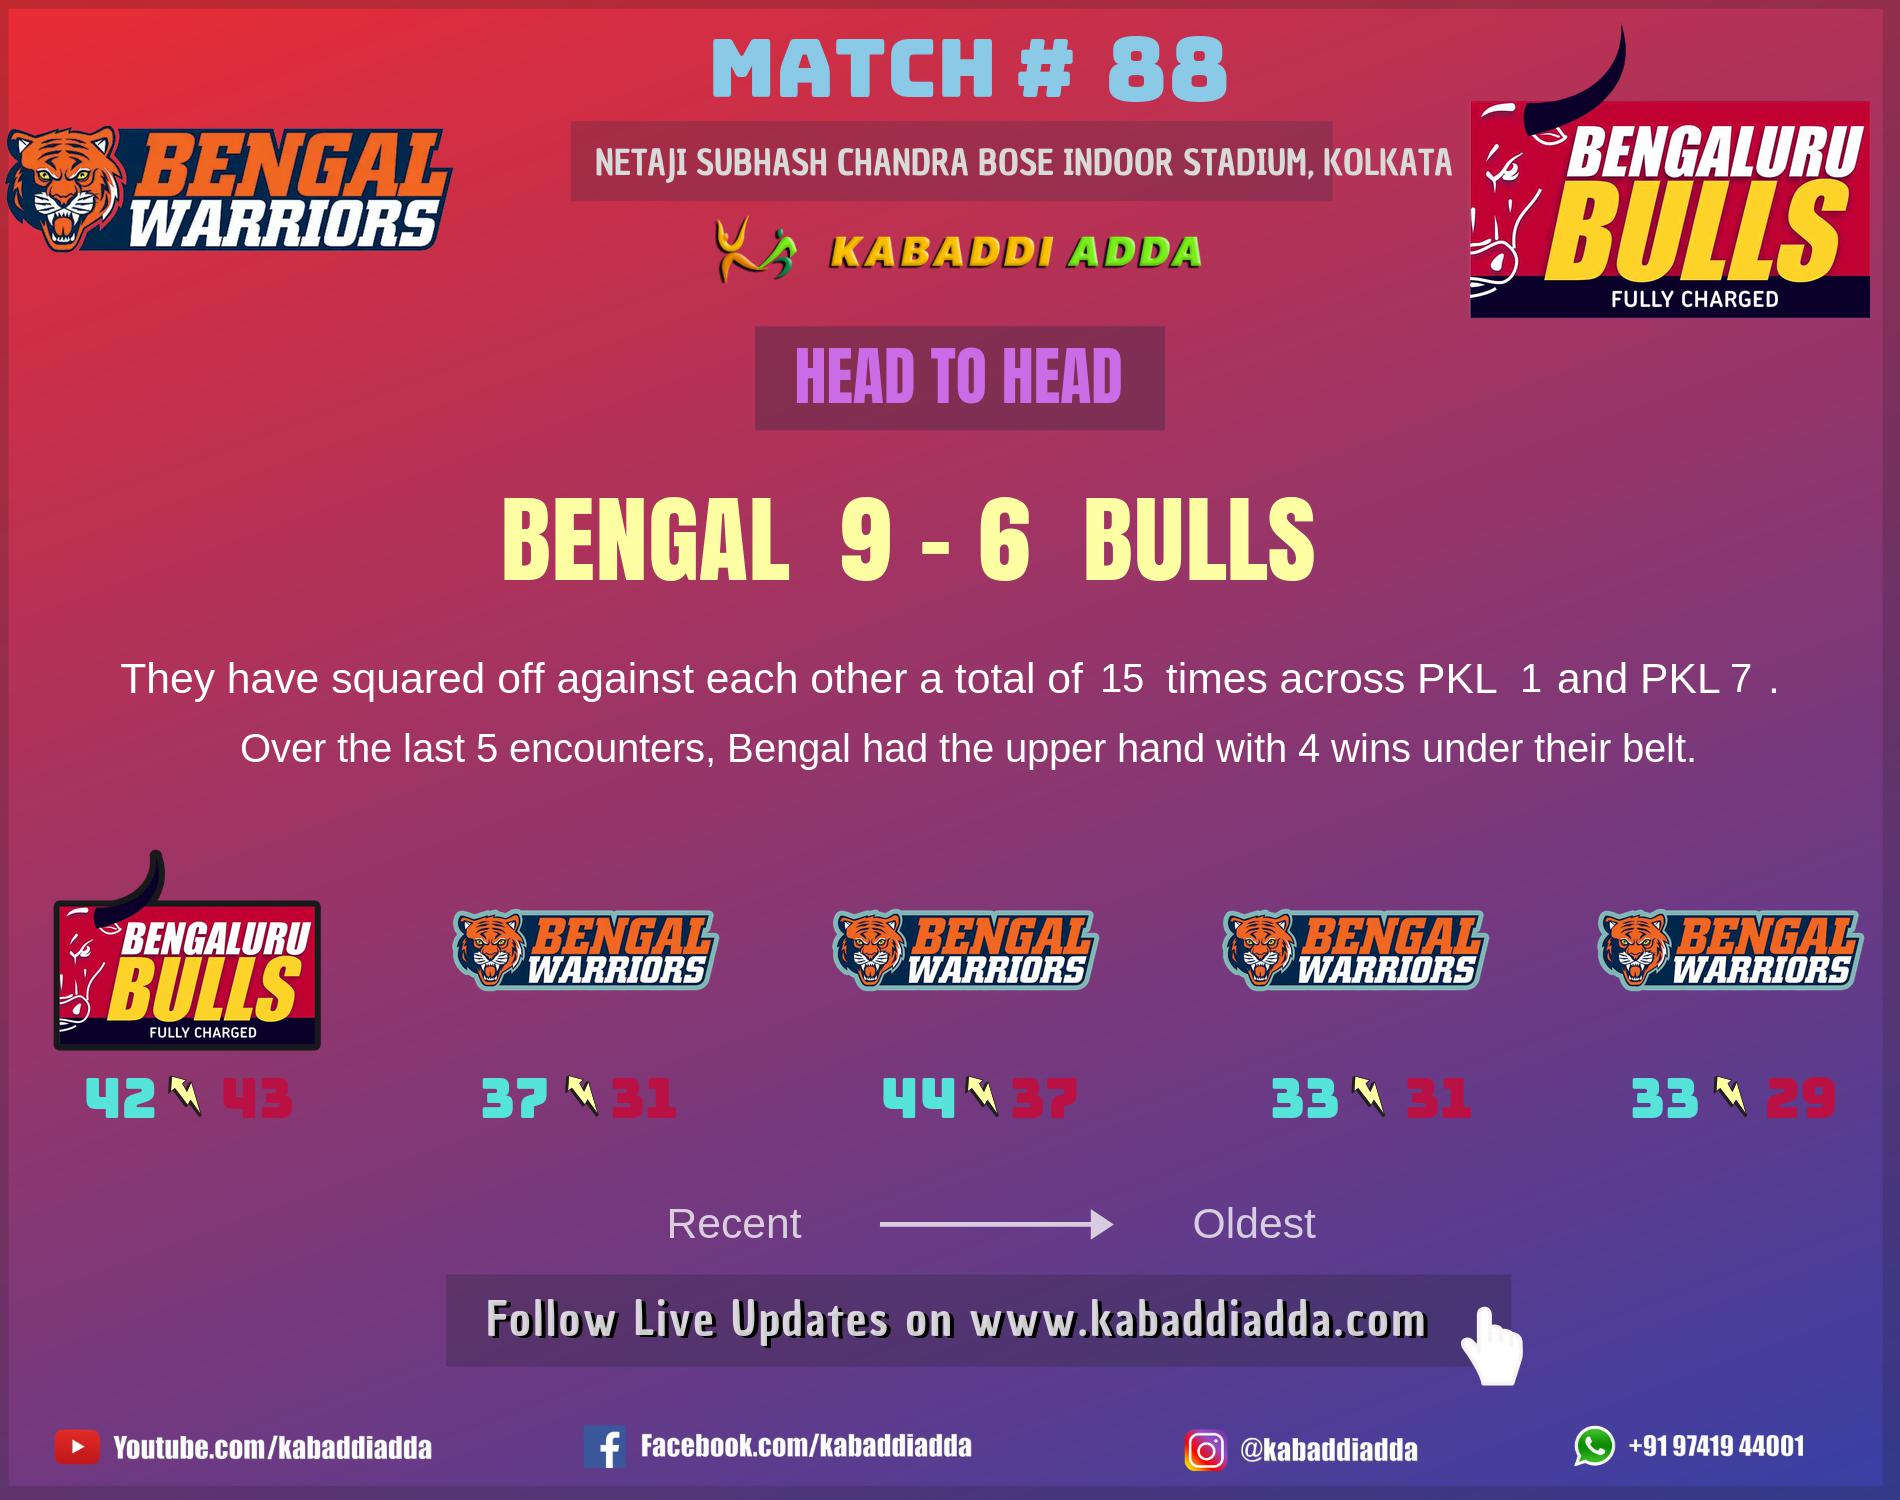 Bengal Warriors is playing against Bengaluru Bulls